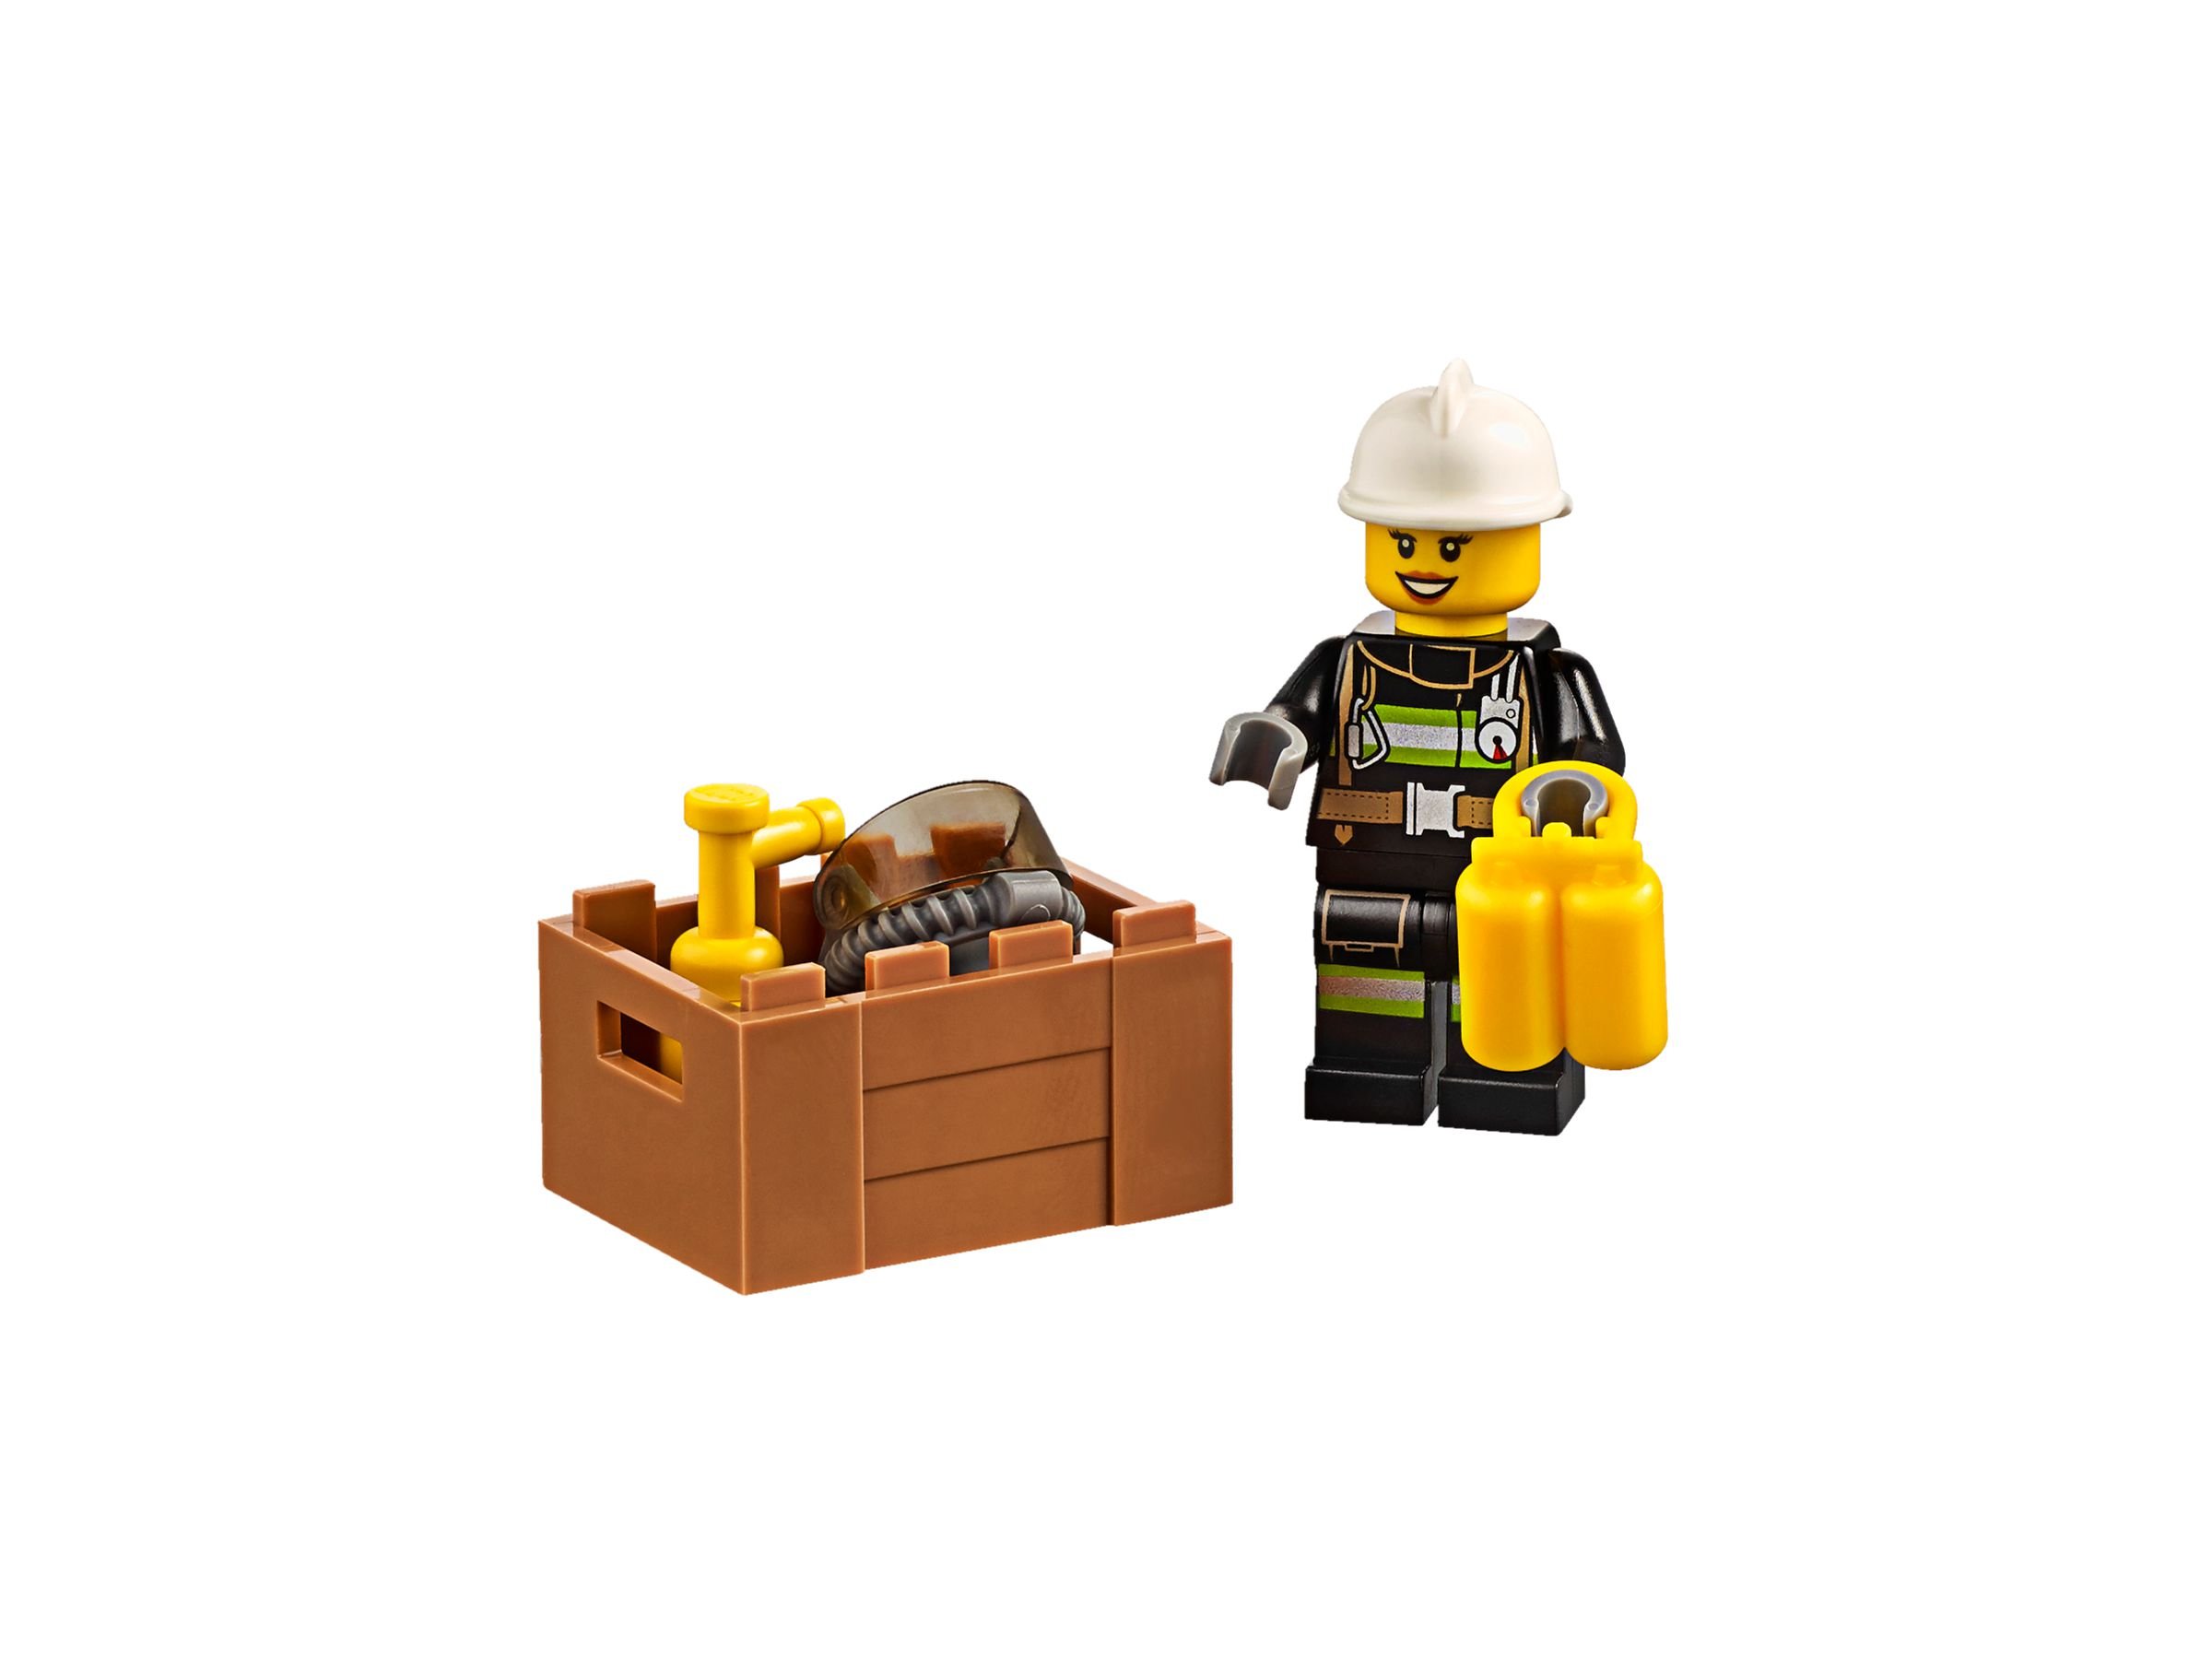 LEGO City 60111 Feuerwehr-Einsatzfahrzeug LEGO_60111_alt4.jpg